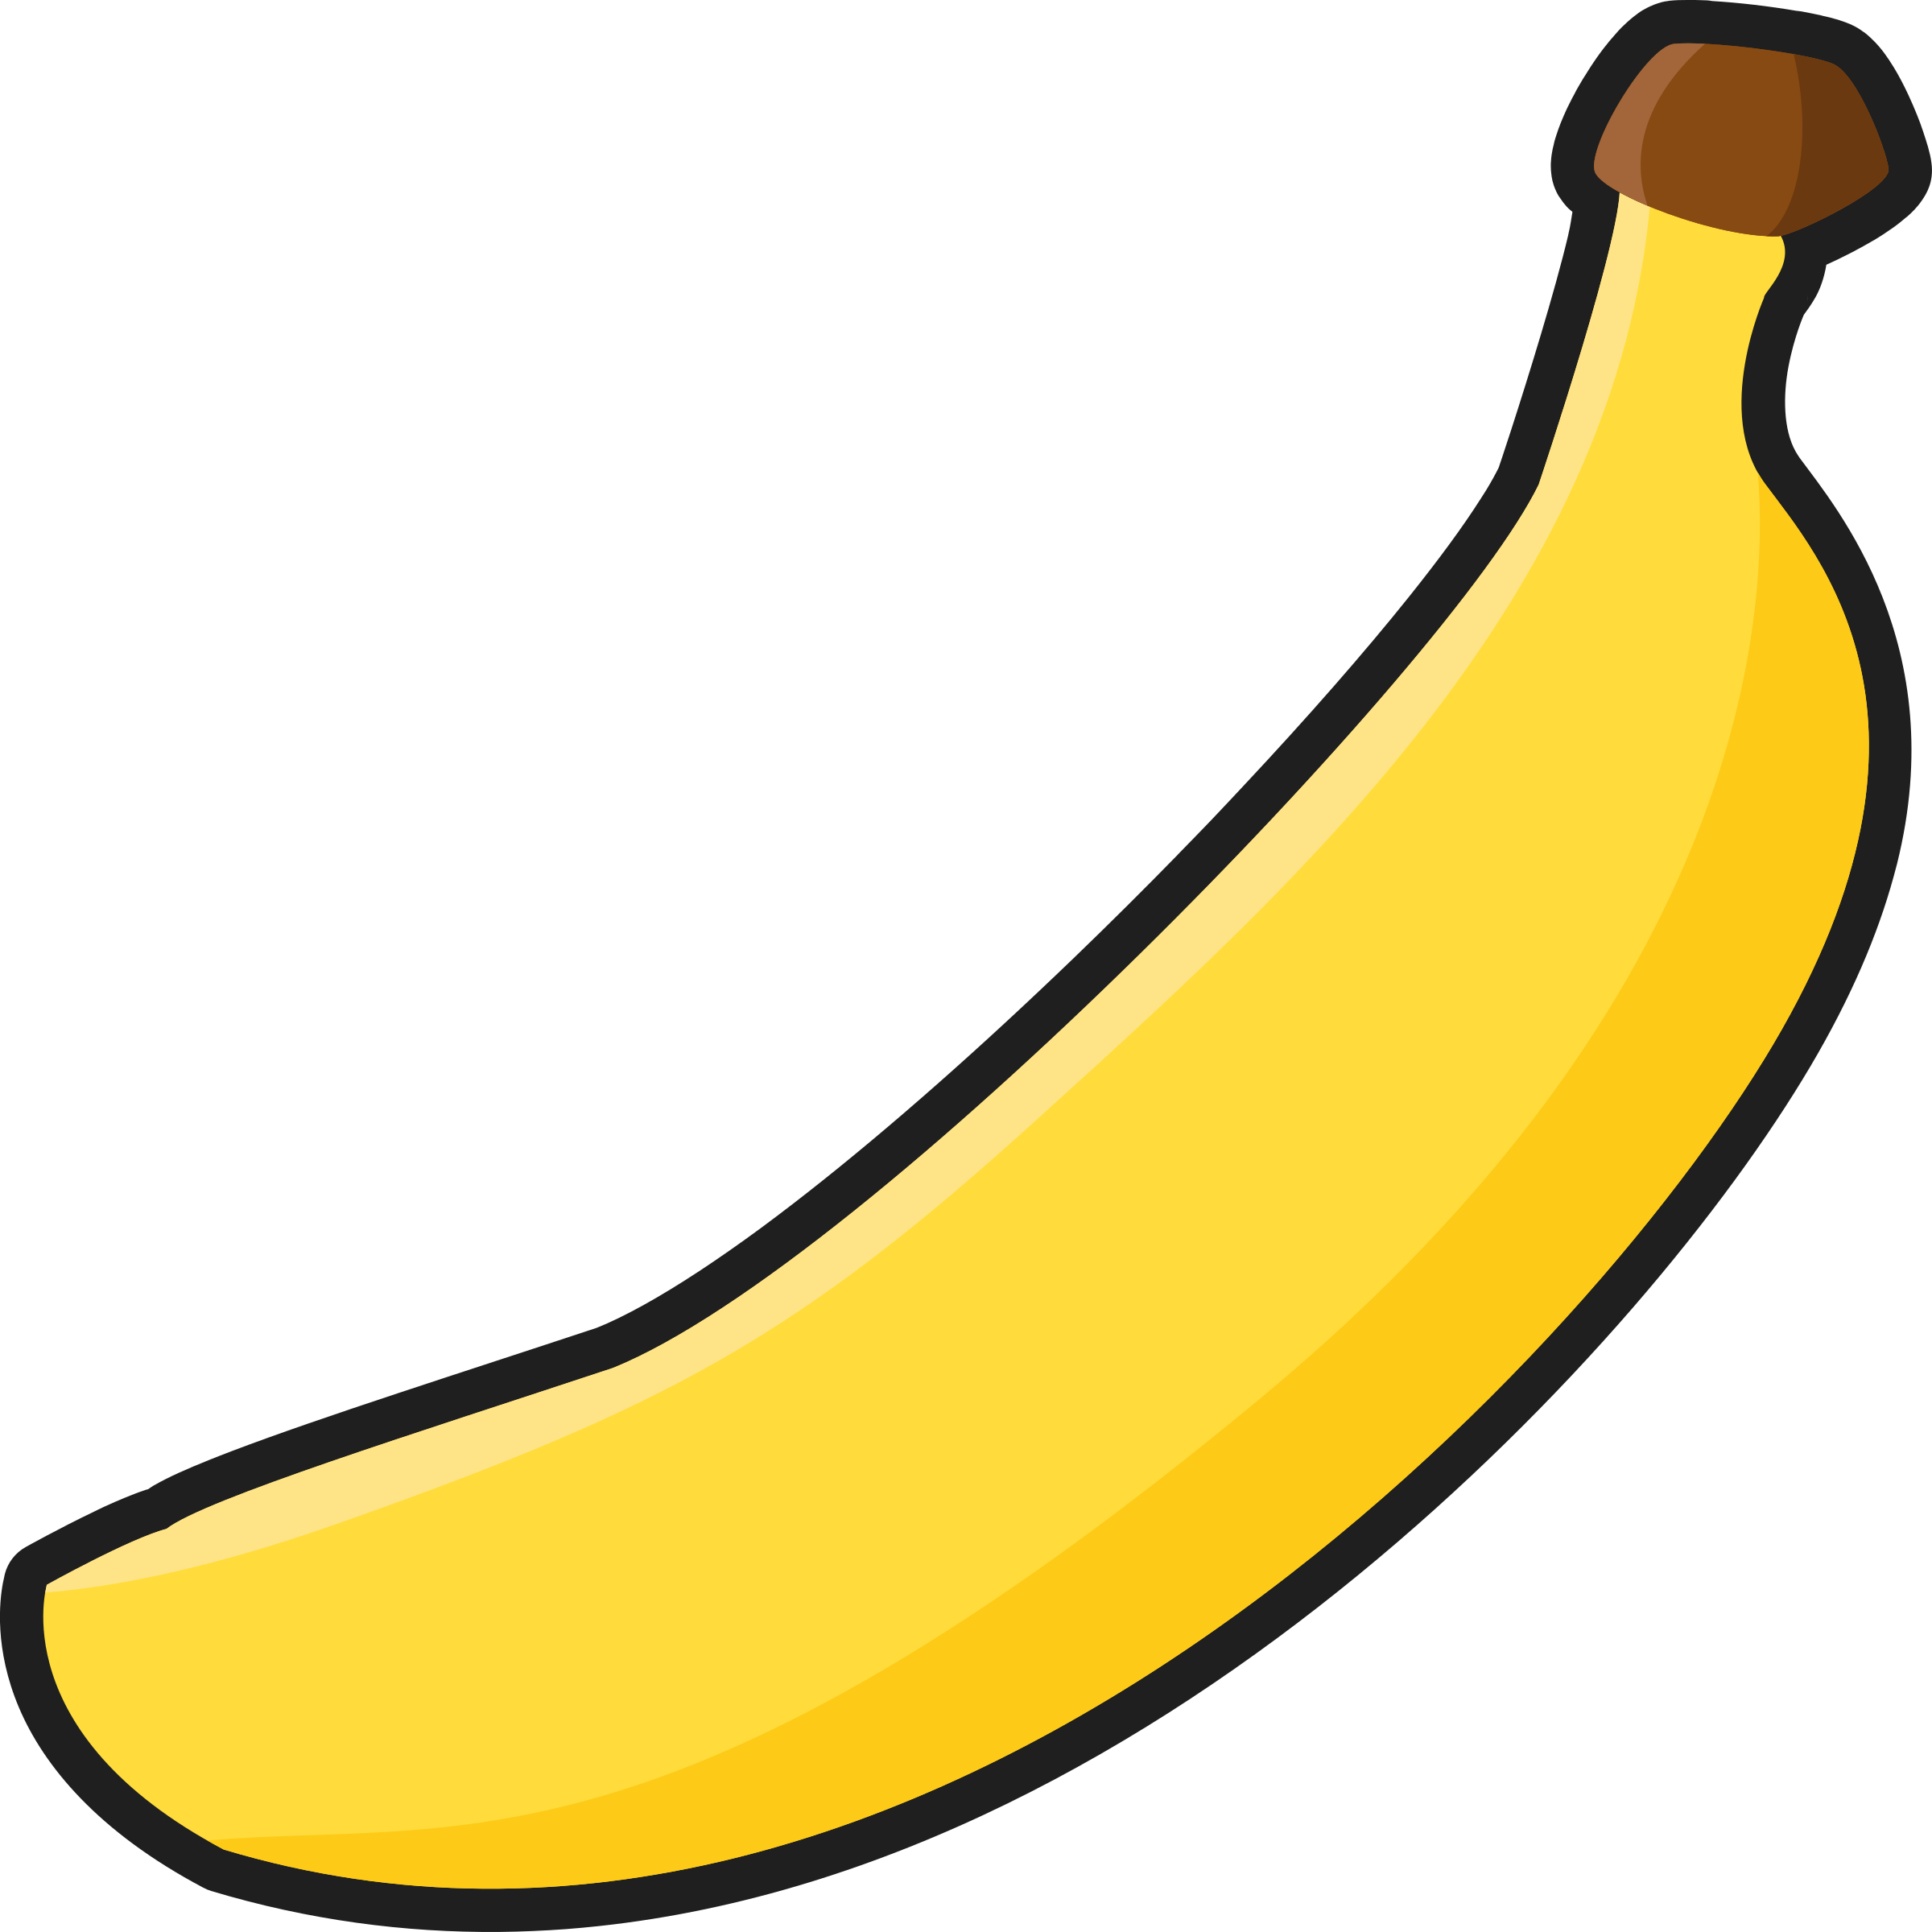 Banana clipart black and white banana clip art black and clipartcow